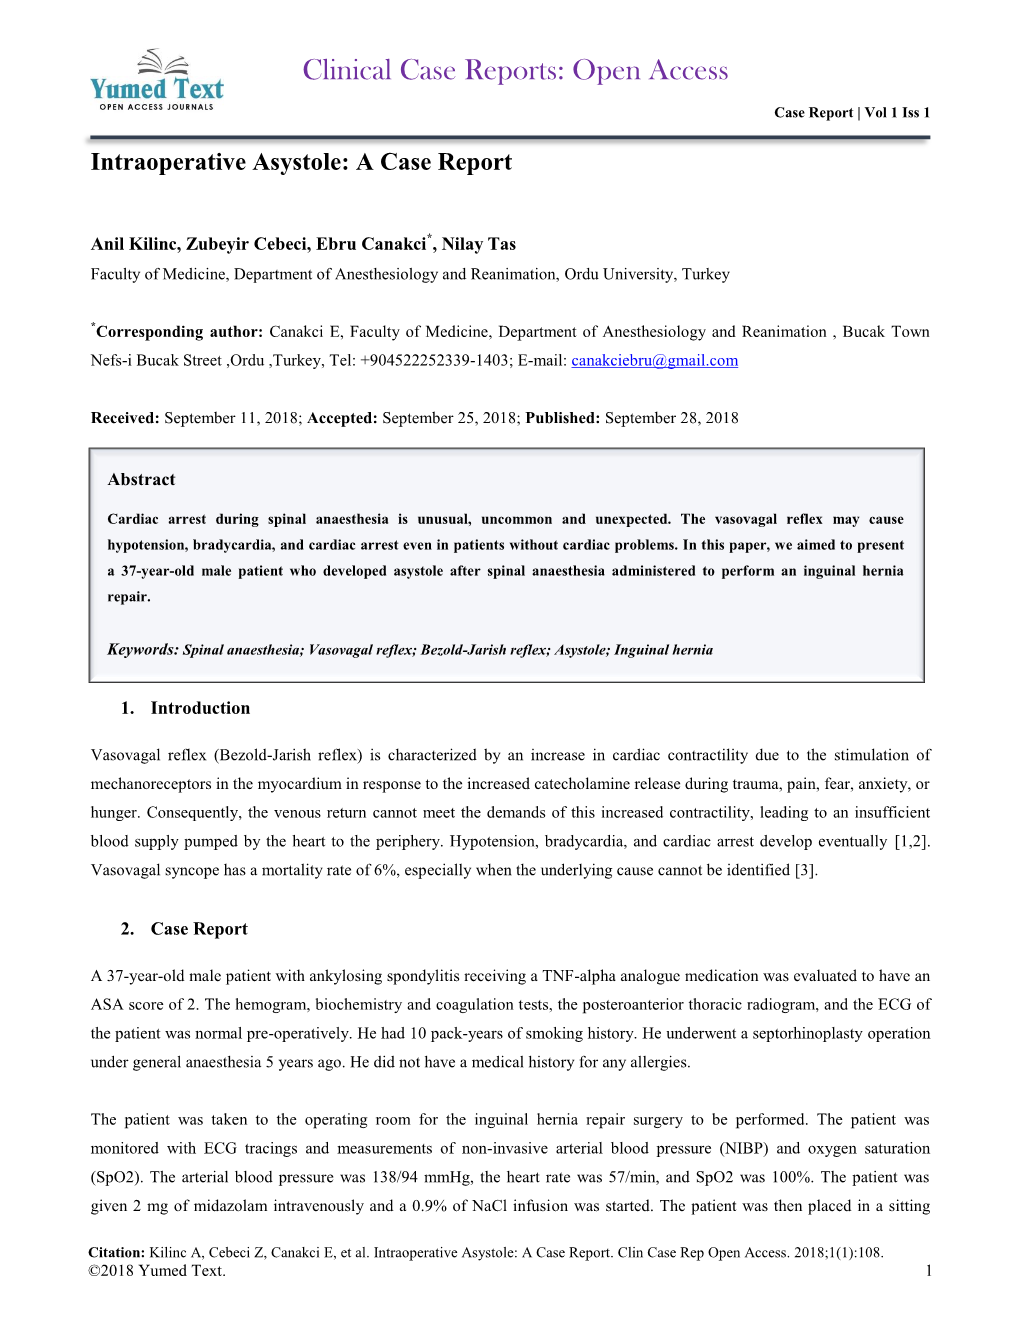 Intraoperative Asystole: a Case Report